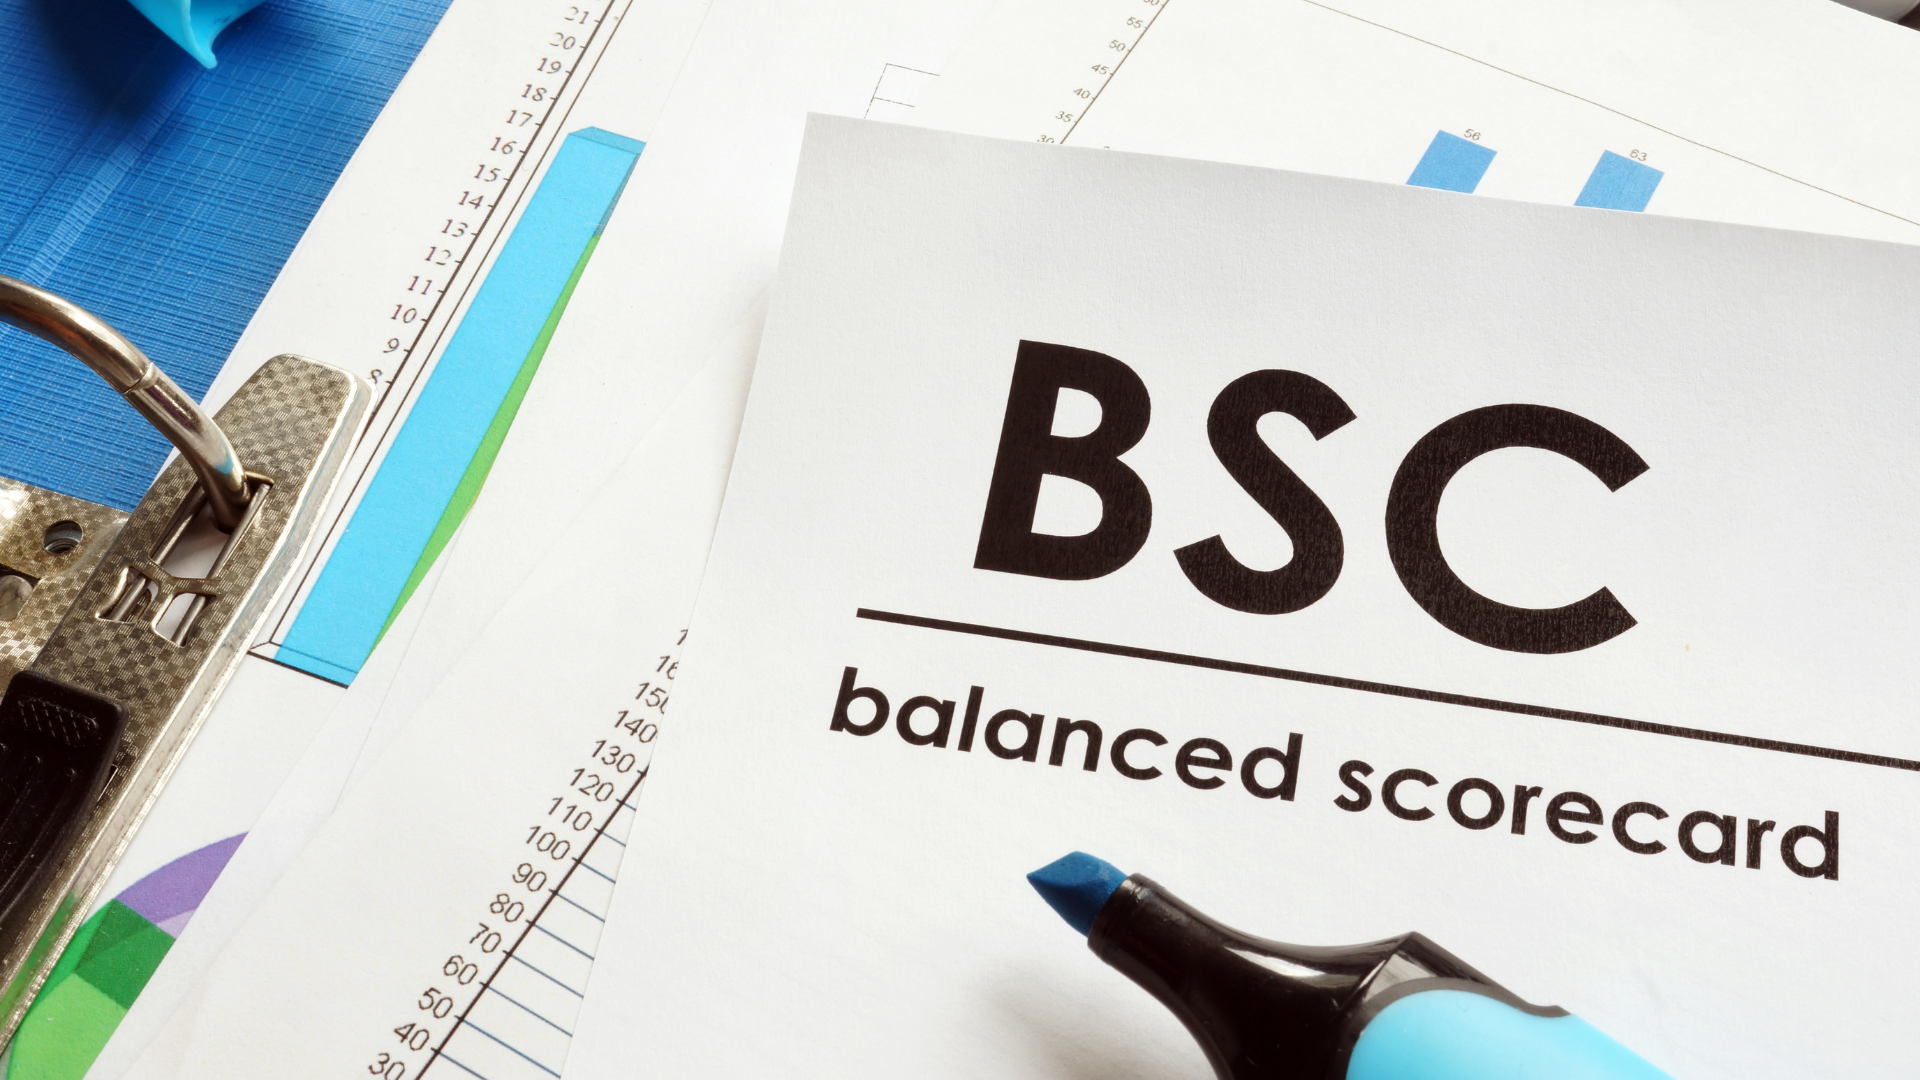 Balanced Scorecard: Driving Business Performance